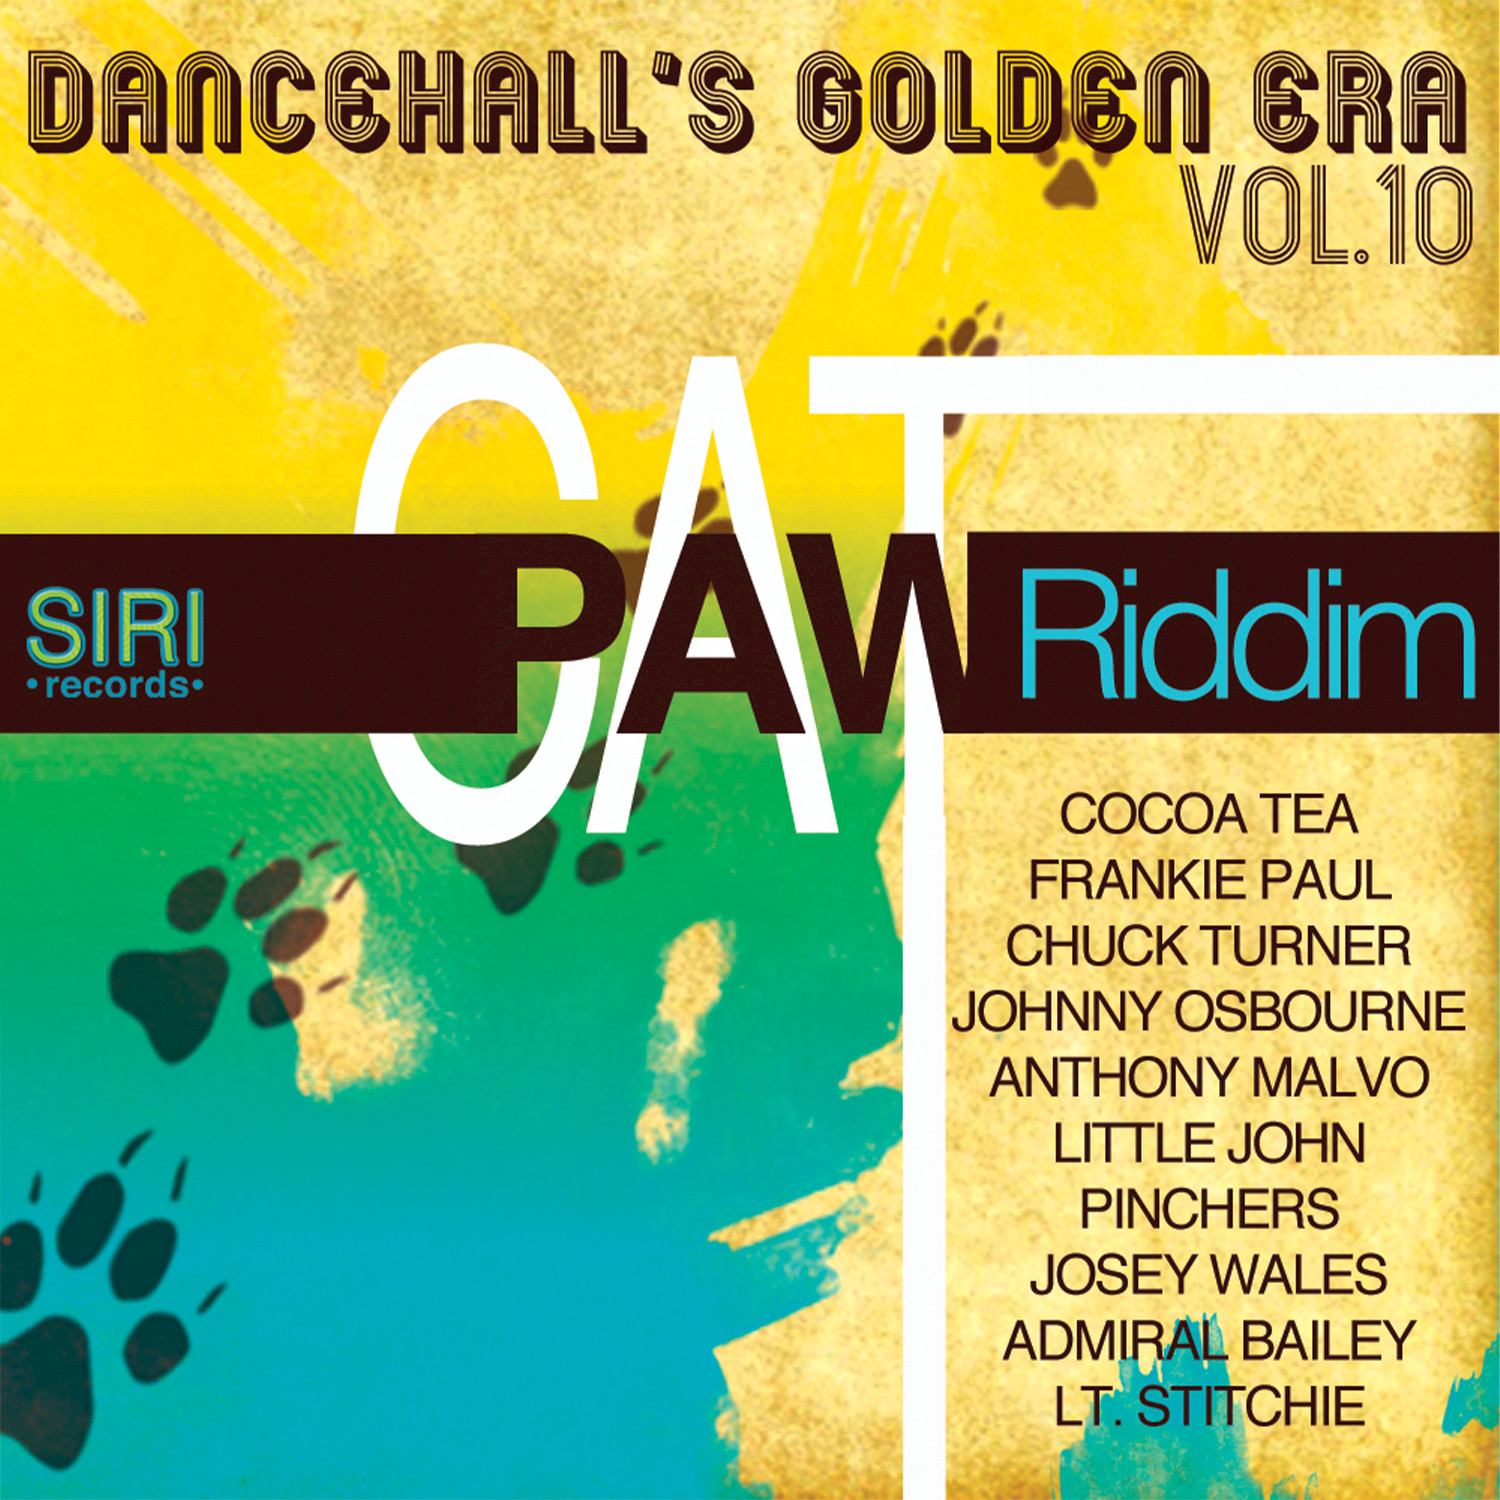 Dancehall's Golden Era, Vol.10 - Cat Paw Riddim